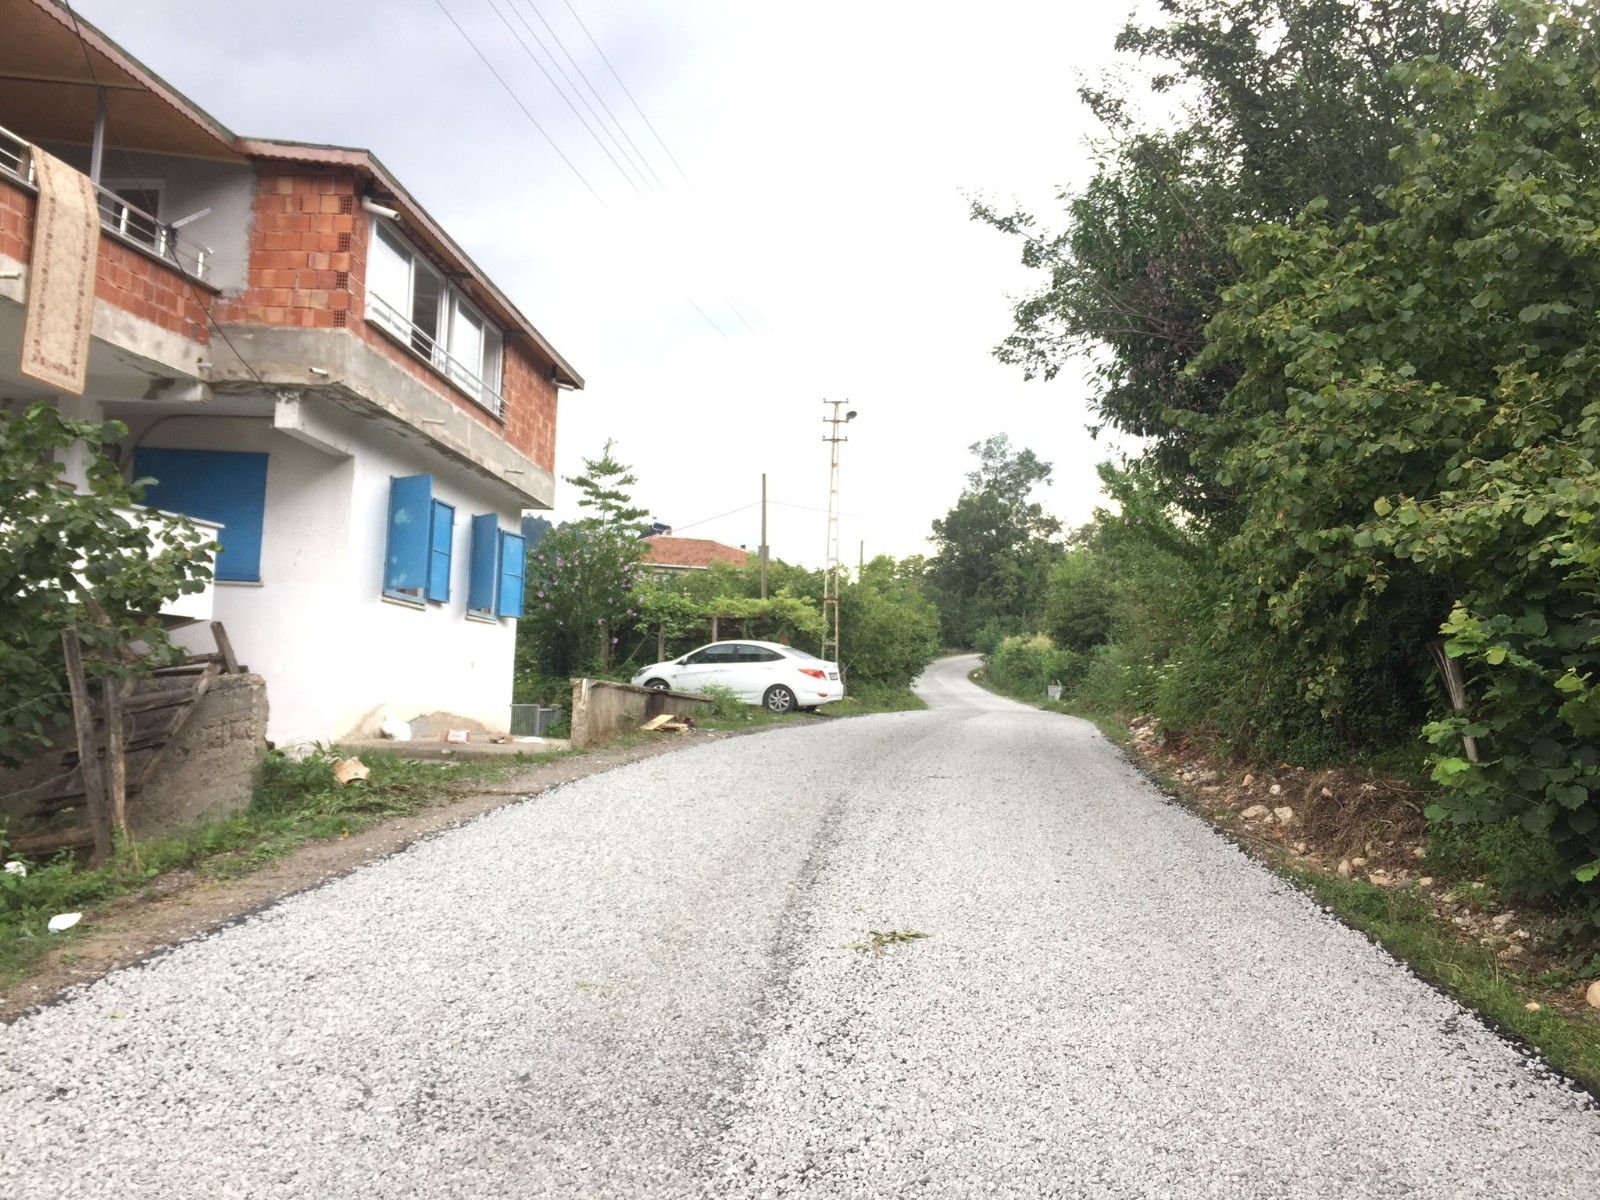 Fatsa’nın yollarına asfalt konforu